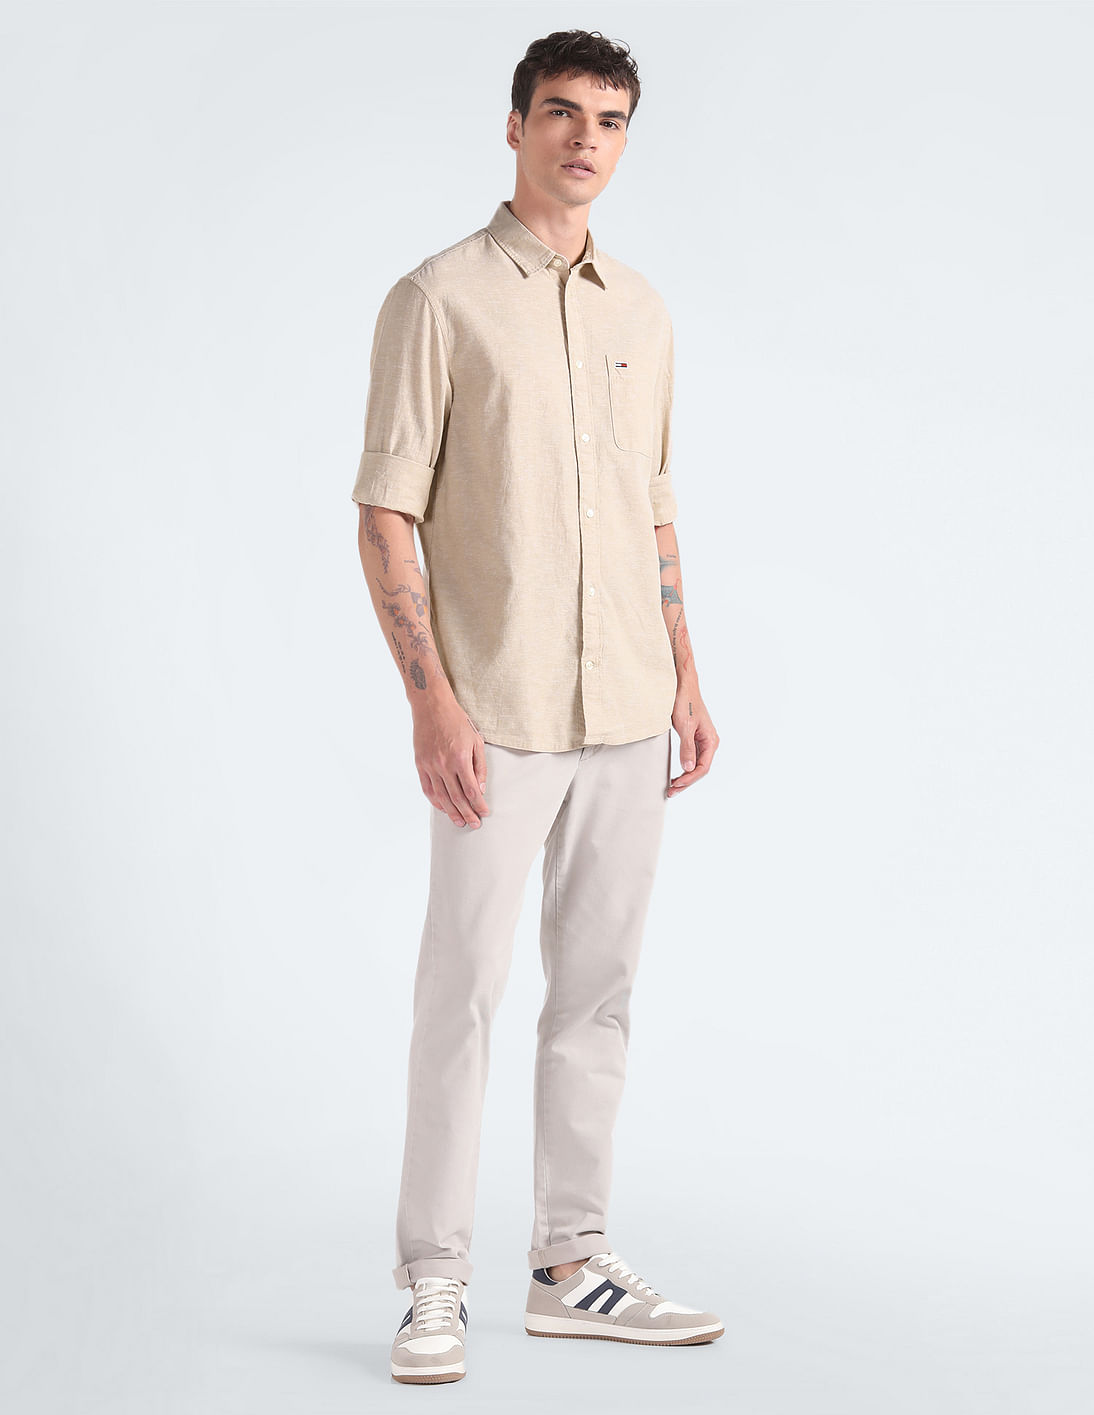 Buy Tommy Hilfiger Chest Pocket Cotton Linen Shirt - NNNOW.com